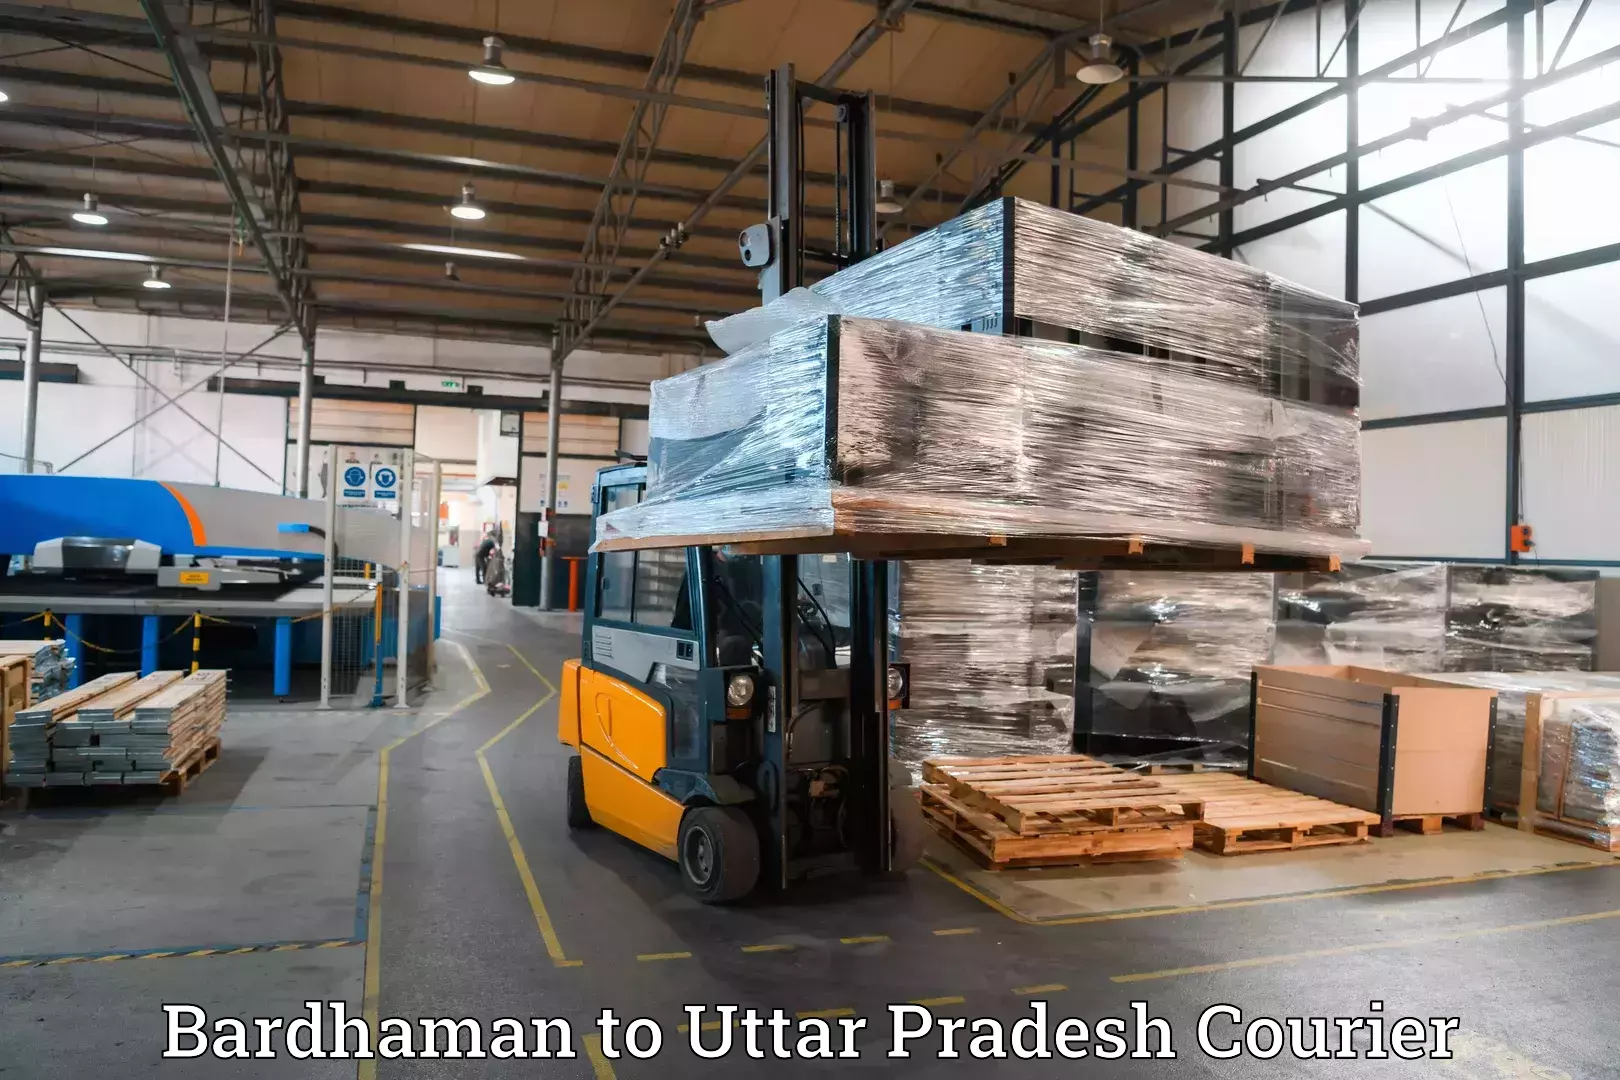 Baggage shipping experience Bardhaman to Sahatwar